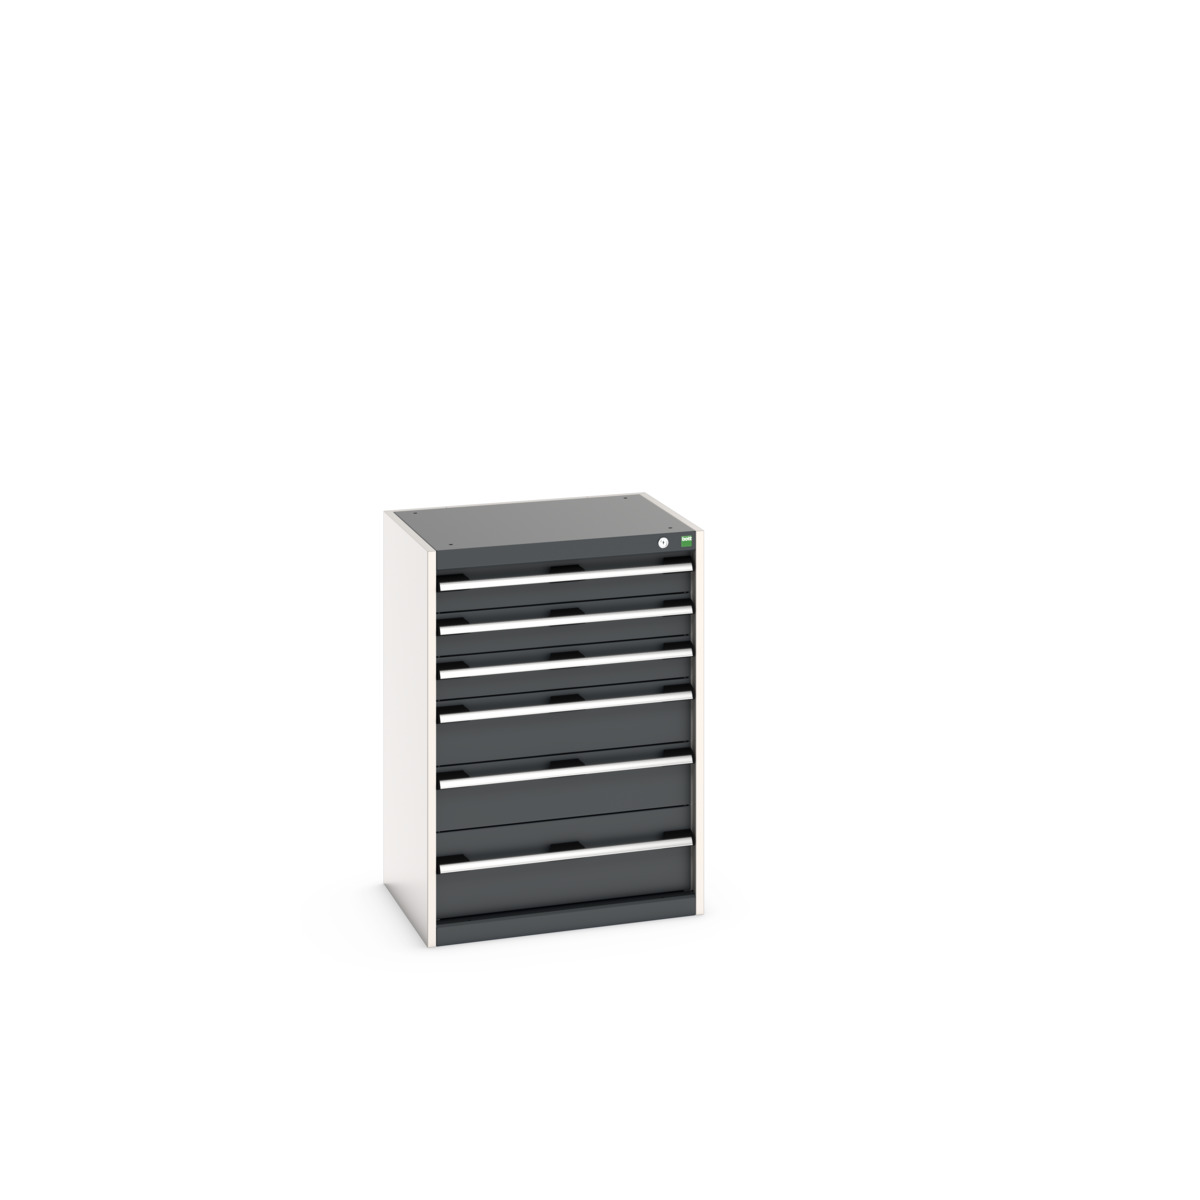 40011050. - cubio drawer cabinet